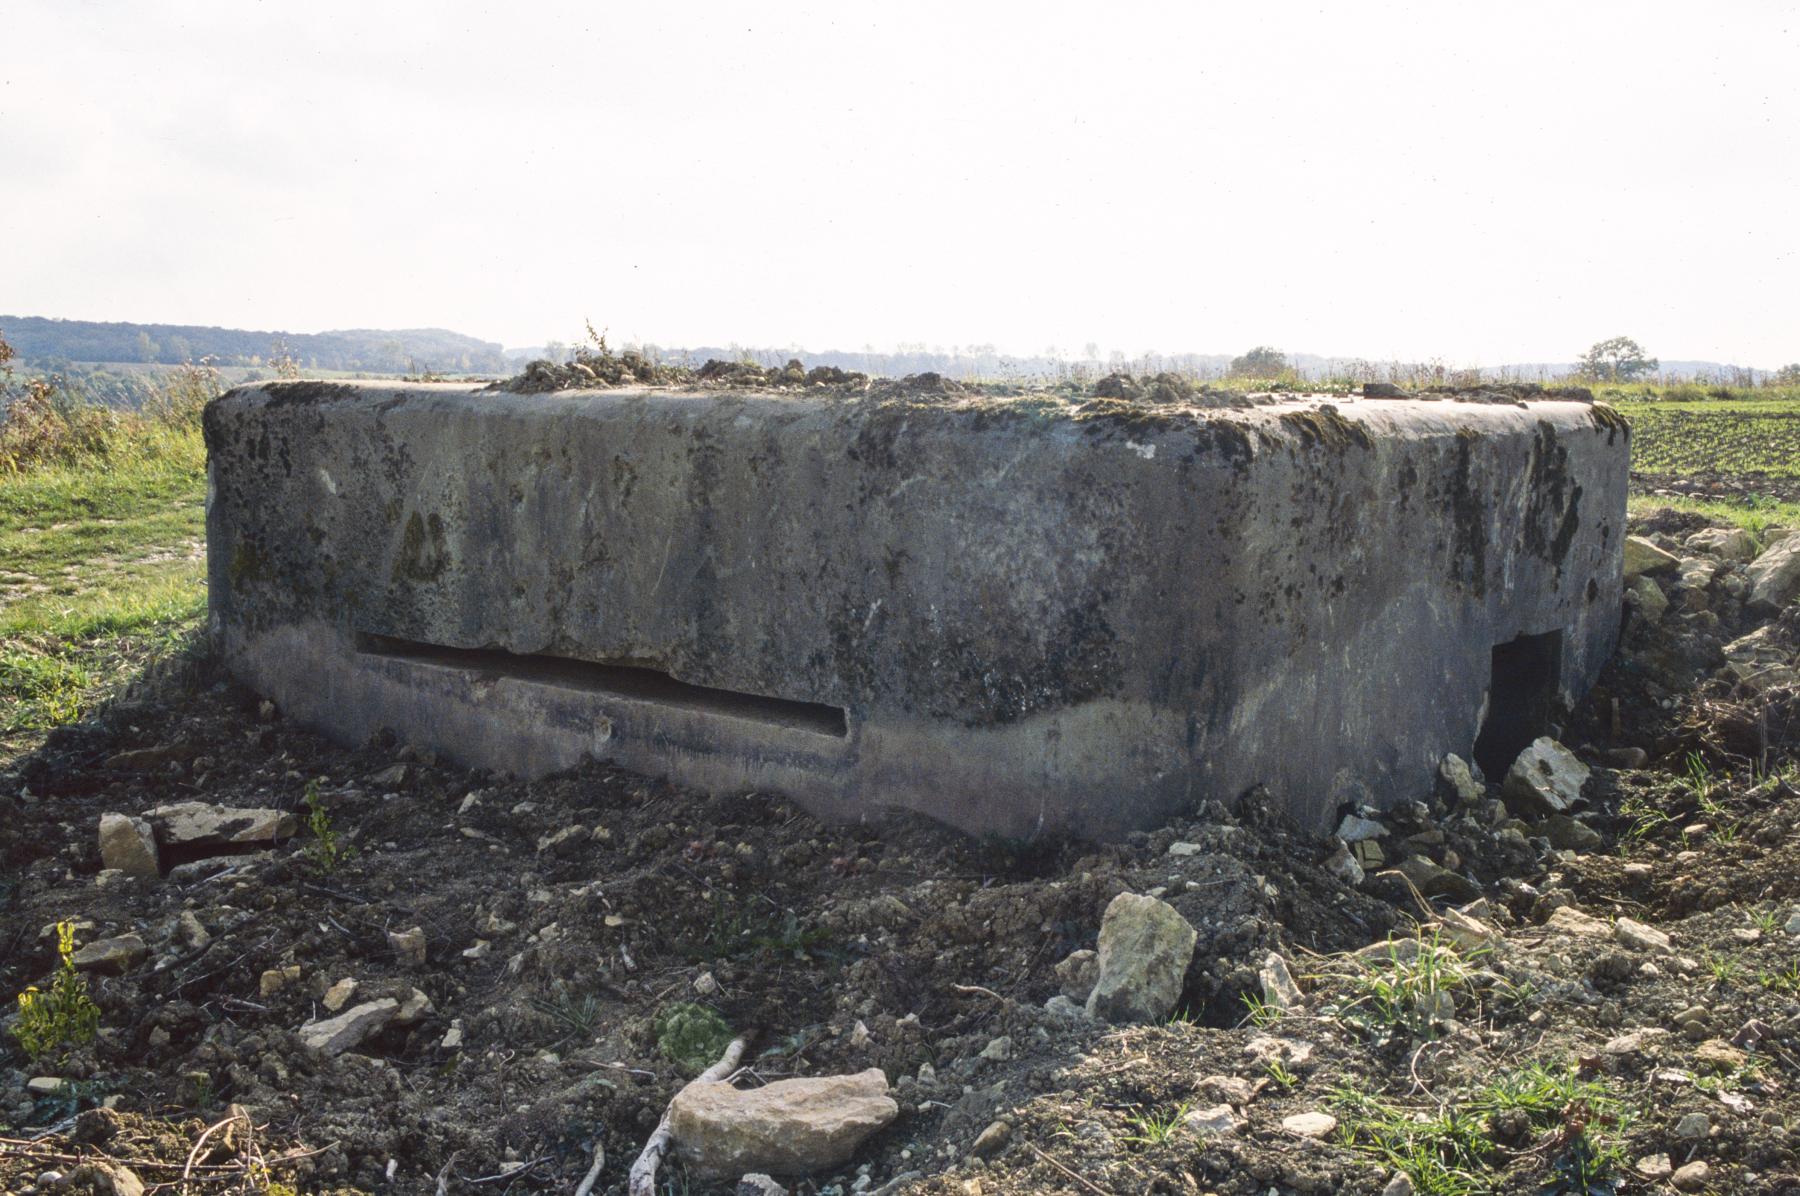 Ligne Maginot - ZIMMING - COTE 362 - (Observatoire d'artillerie) - 